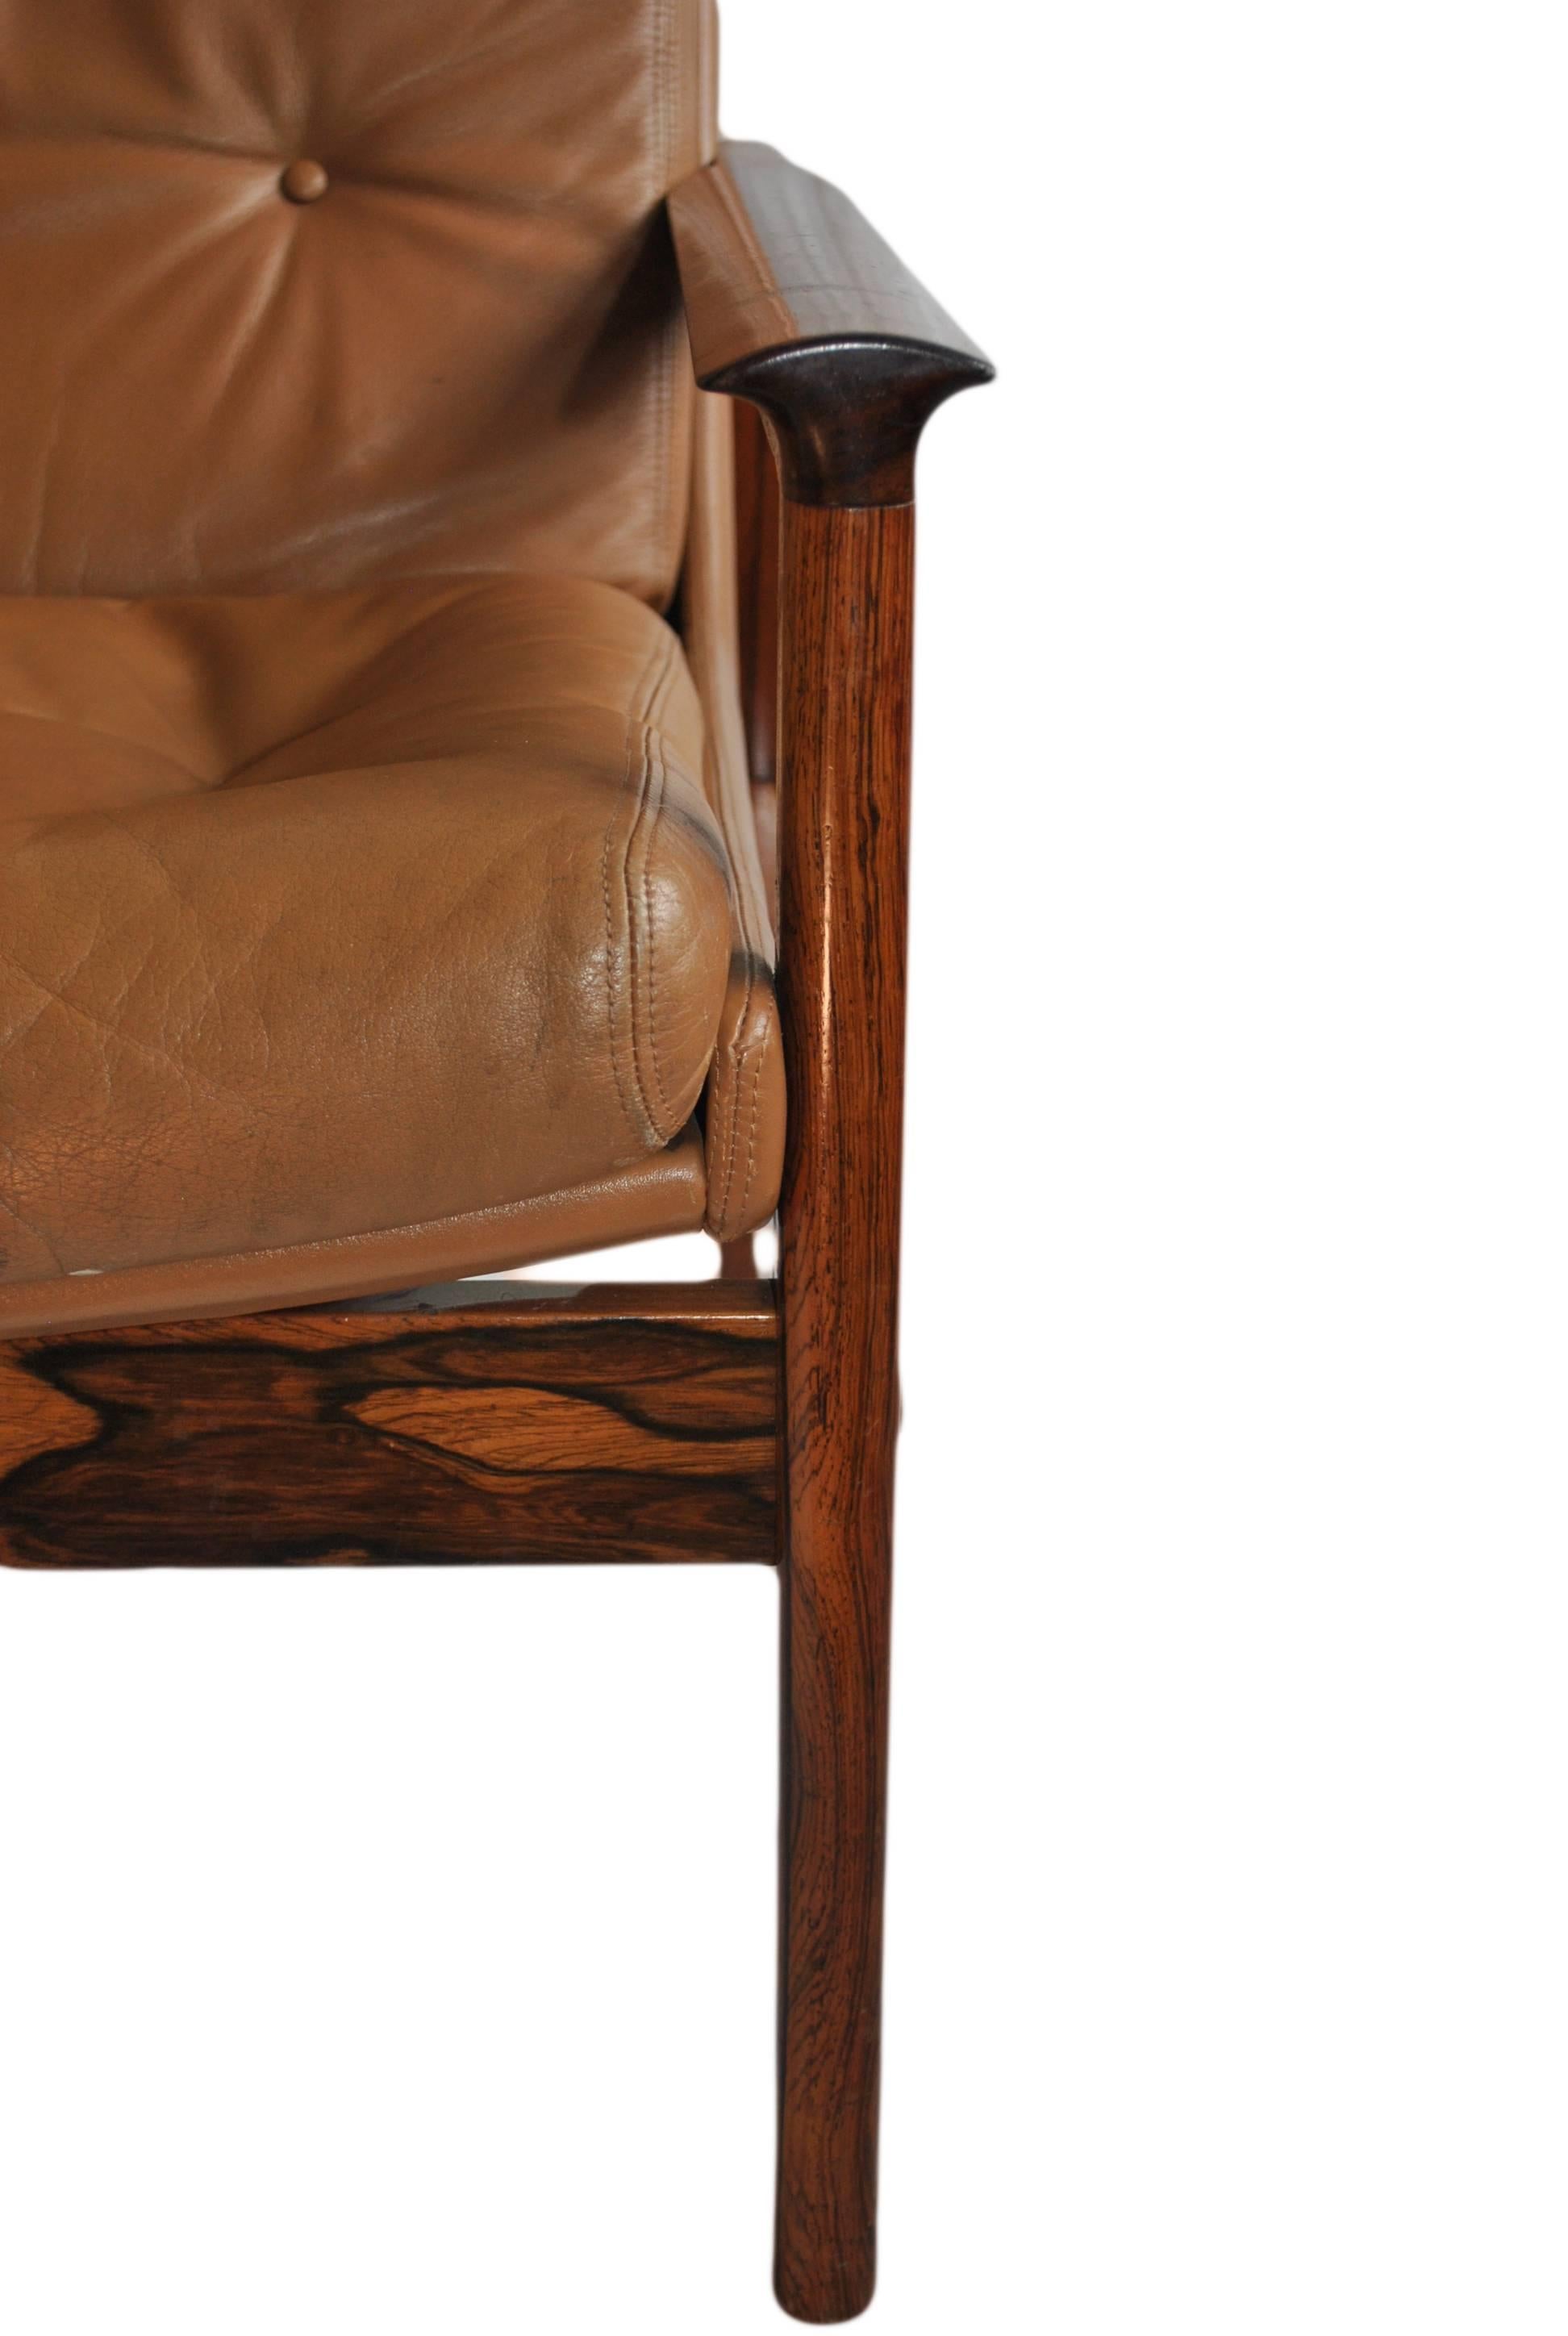 20th Century Mid-Century leather armchair and ottoman.